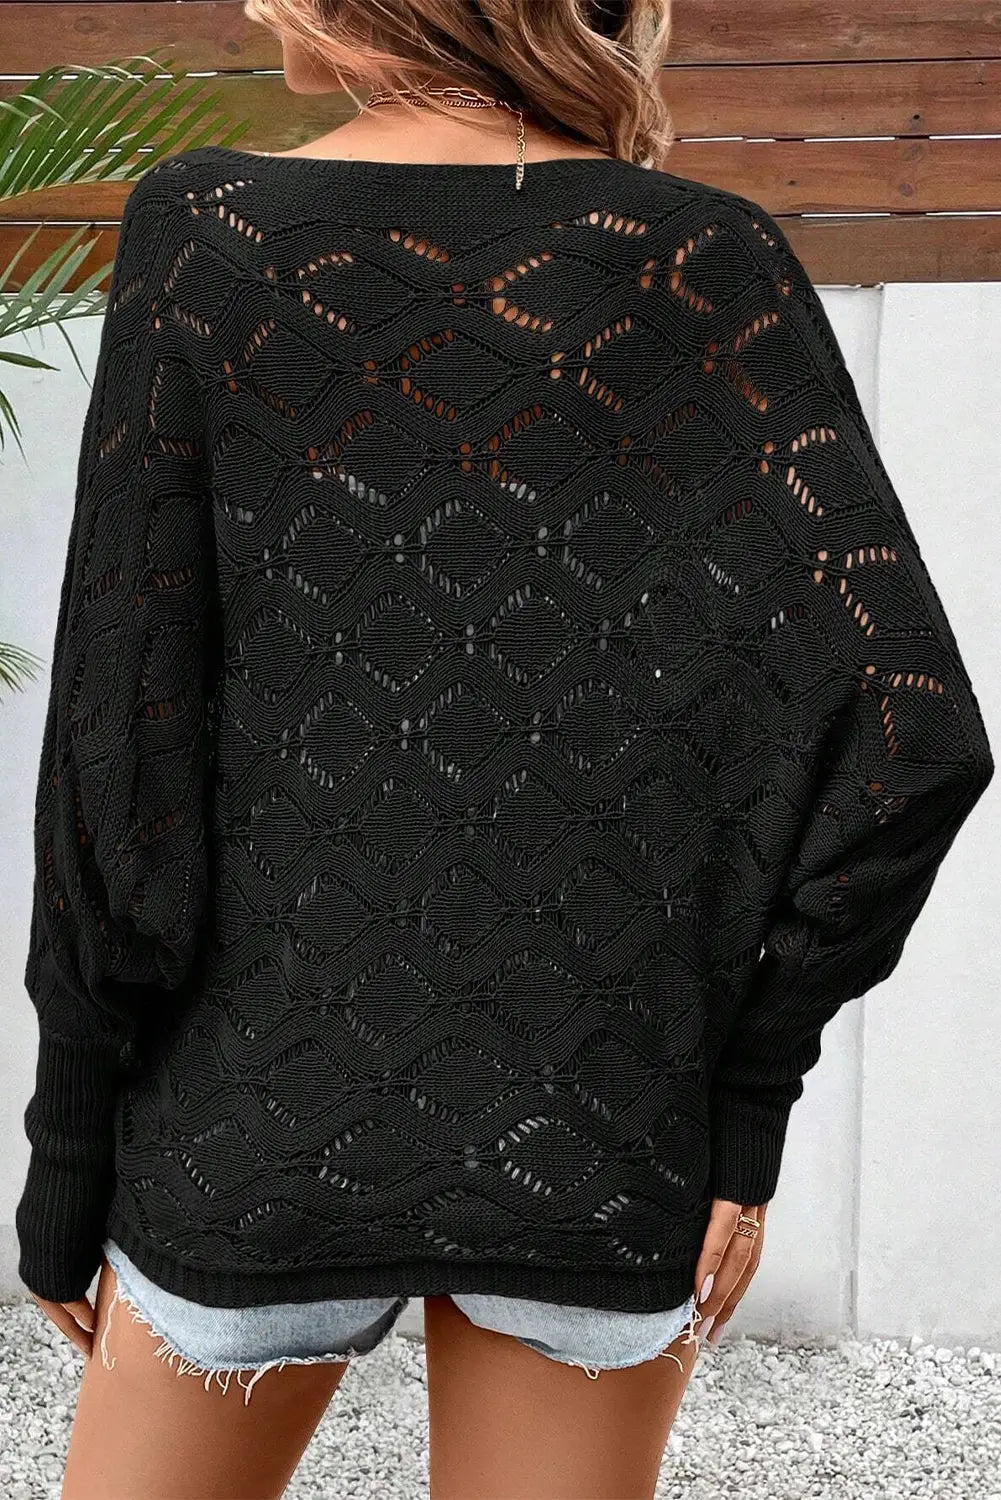 Black chic rhombus knit dolman sleeve sweater - sweaters & cardigans